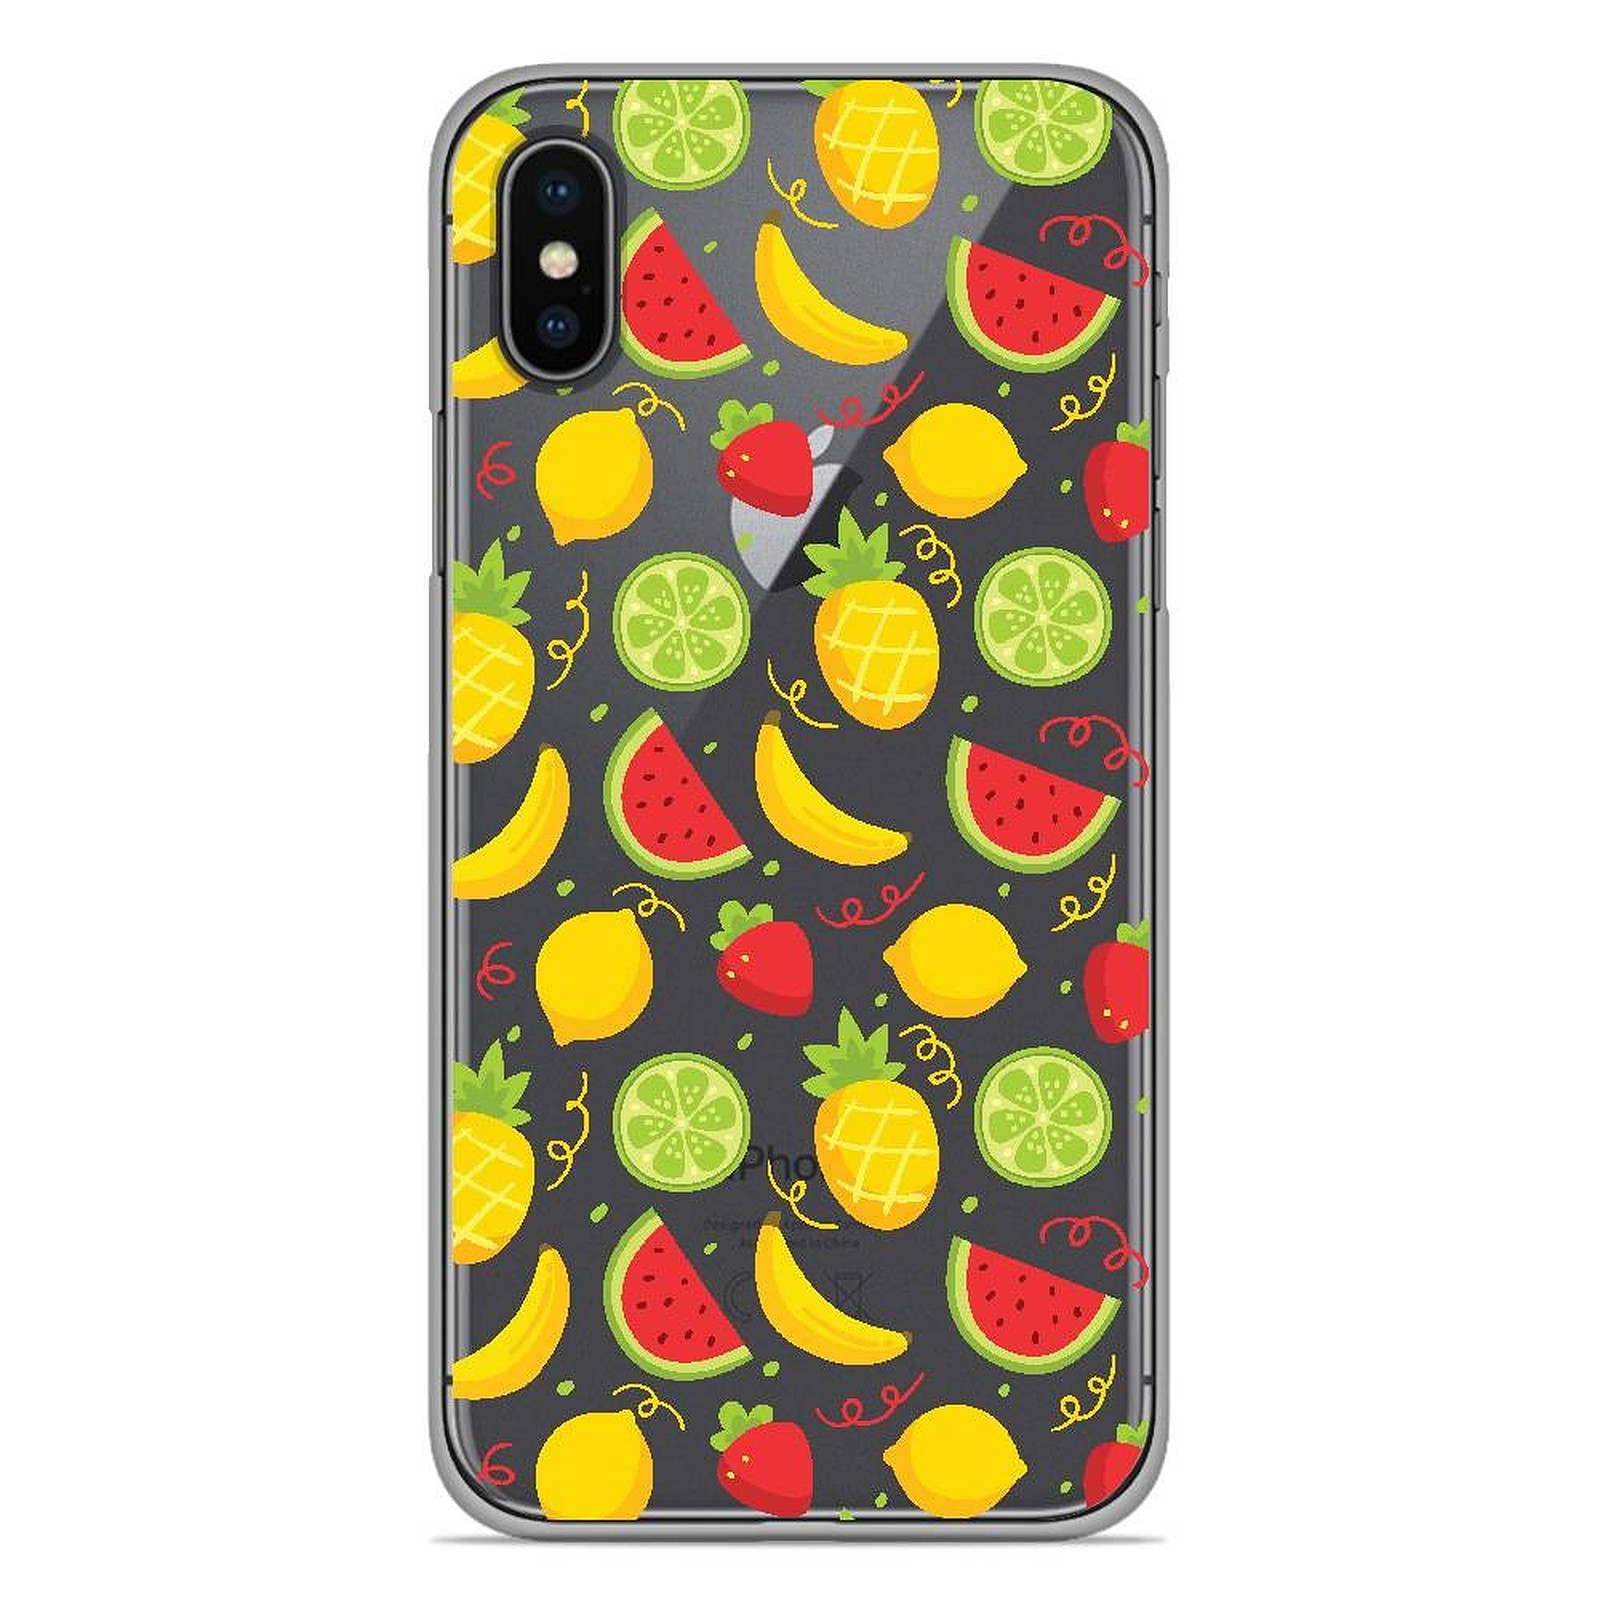 1001 Coques Coque silicone gel Apple iPhone XS Max motif Fruits tropicaux - Coque telephone 1001Coques